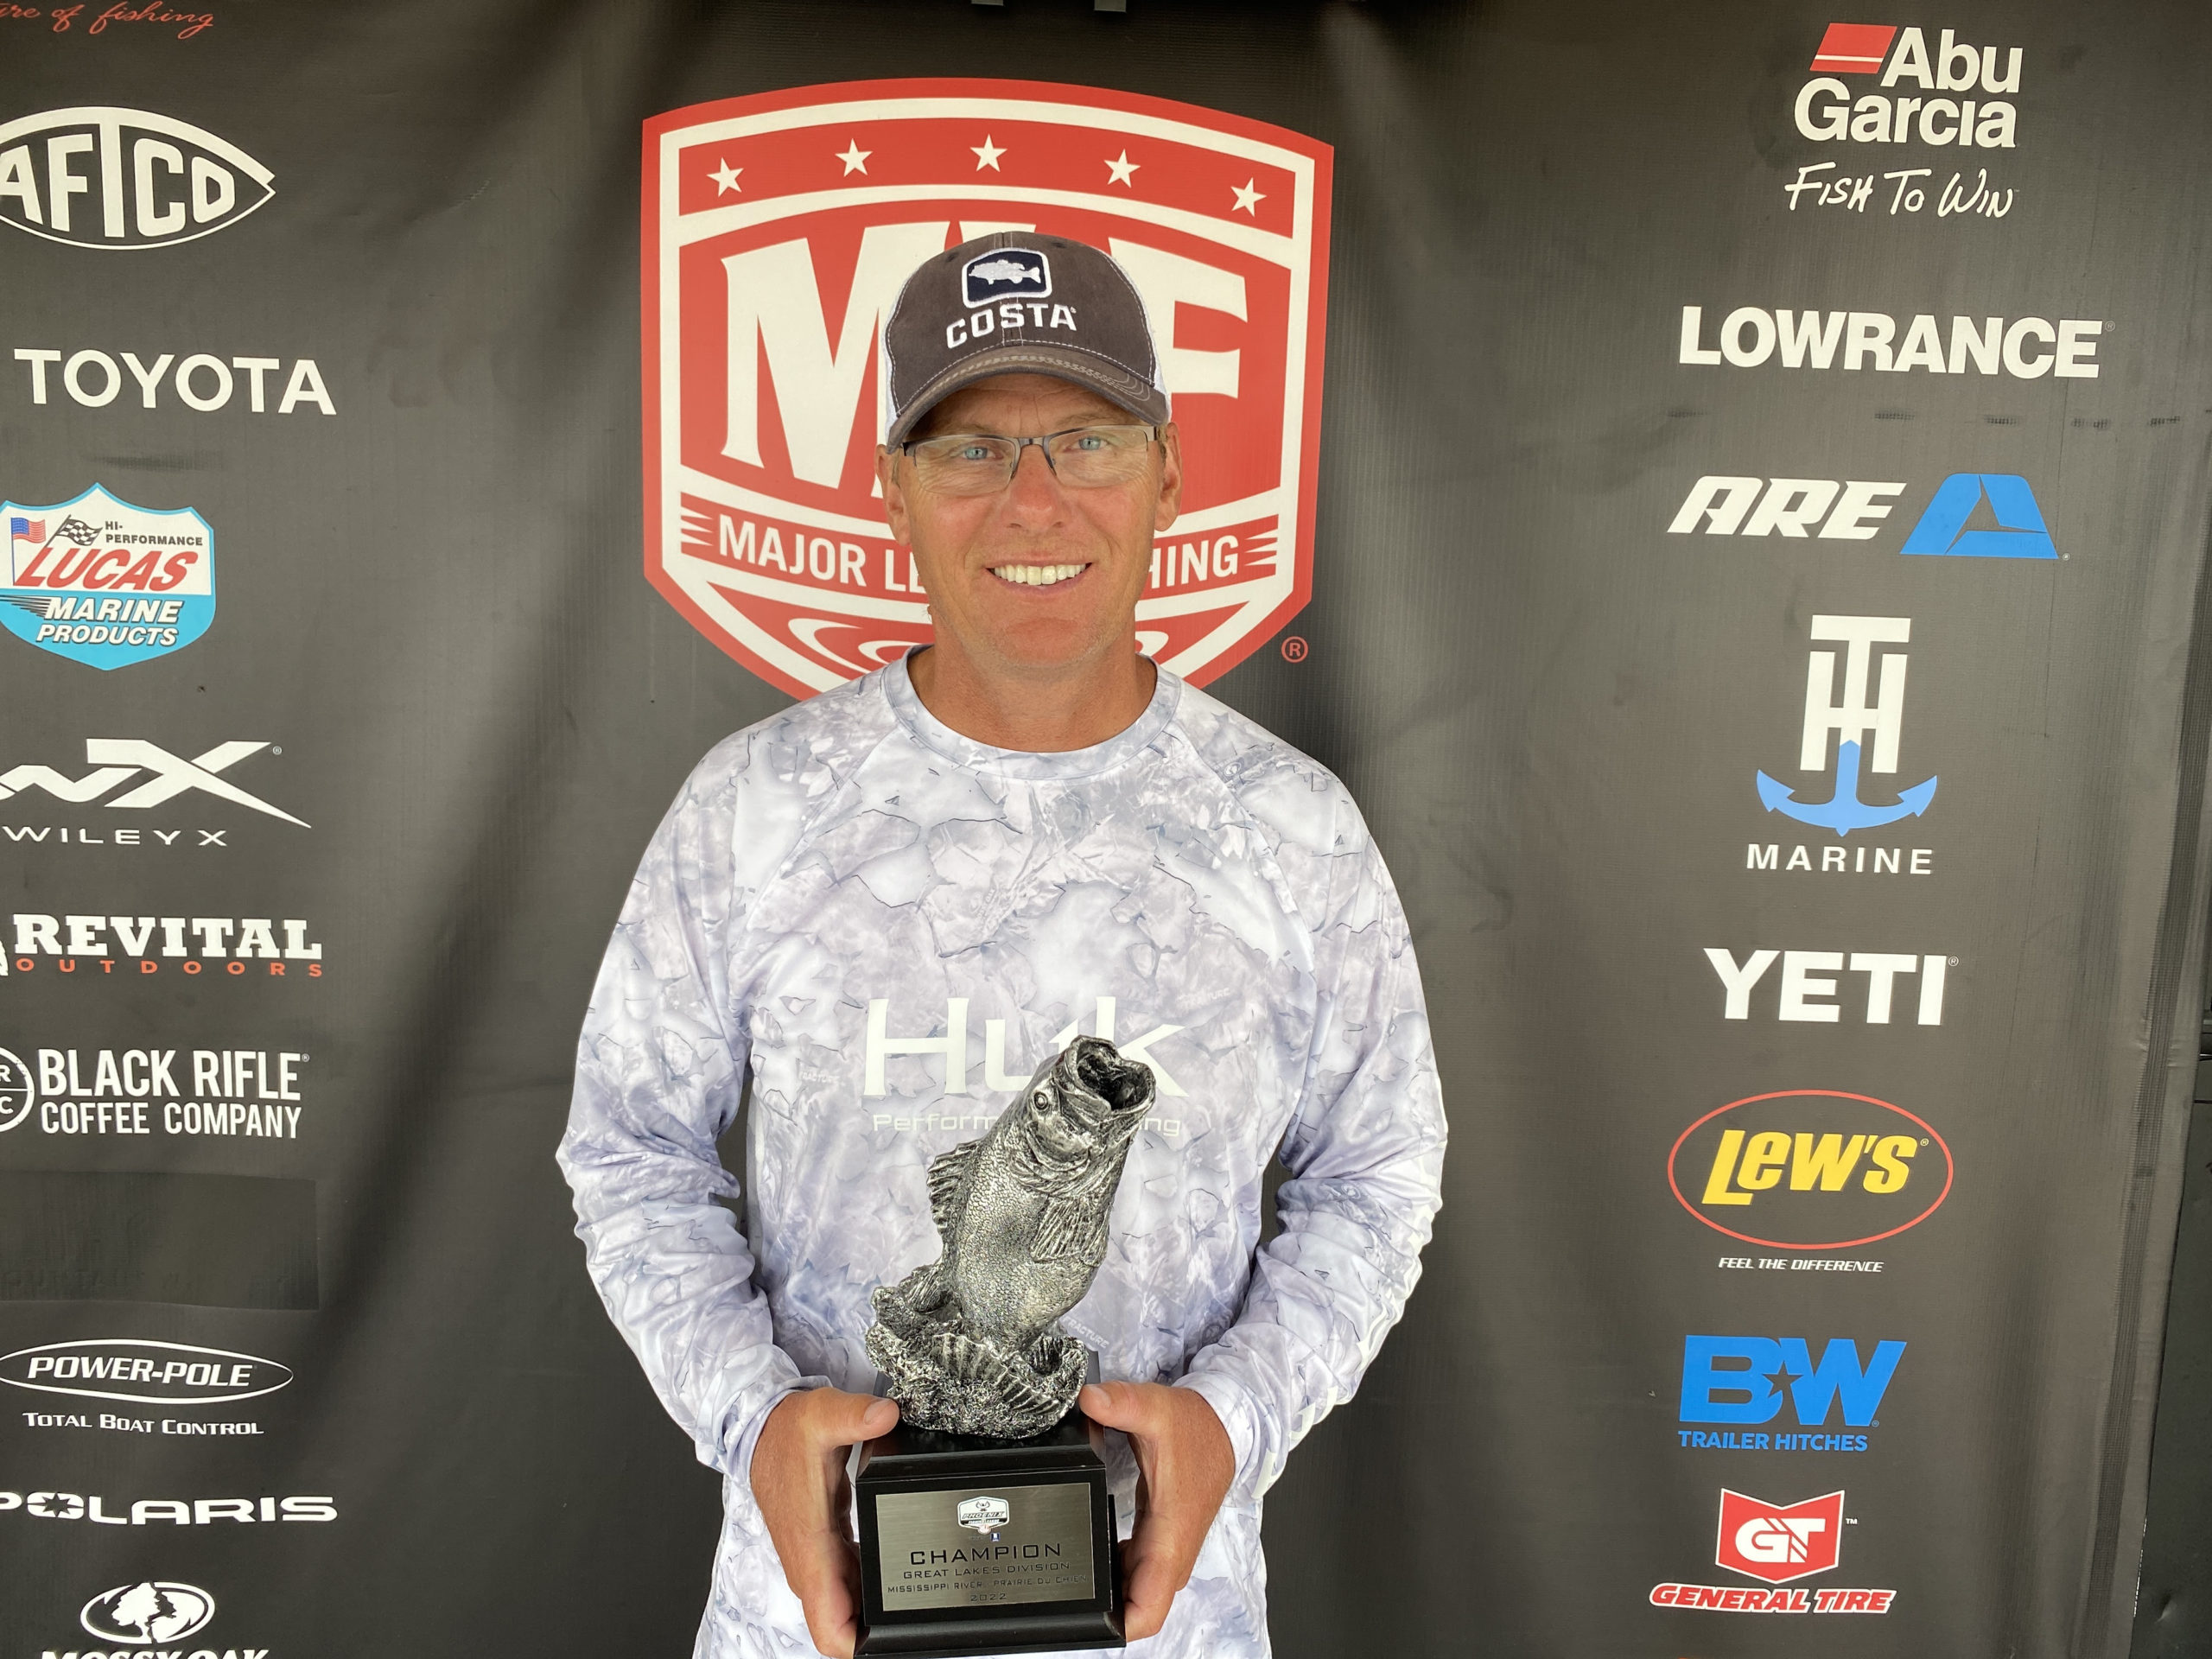   
																Illinois’ Feldermann Wins Phoenix Bass Fishing League Event on the Mississippi River 
															 